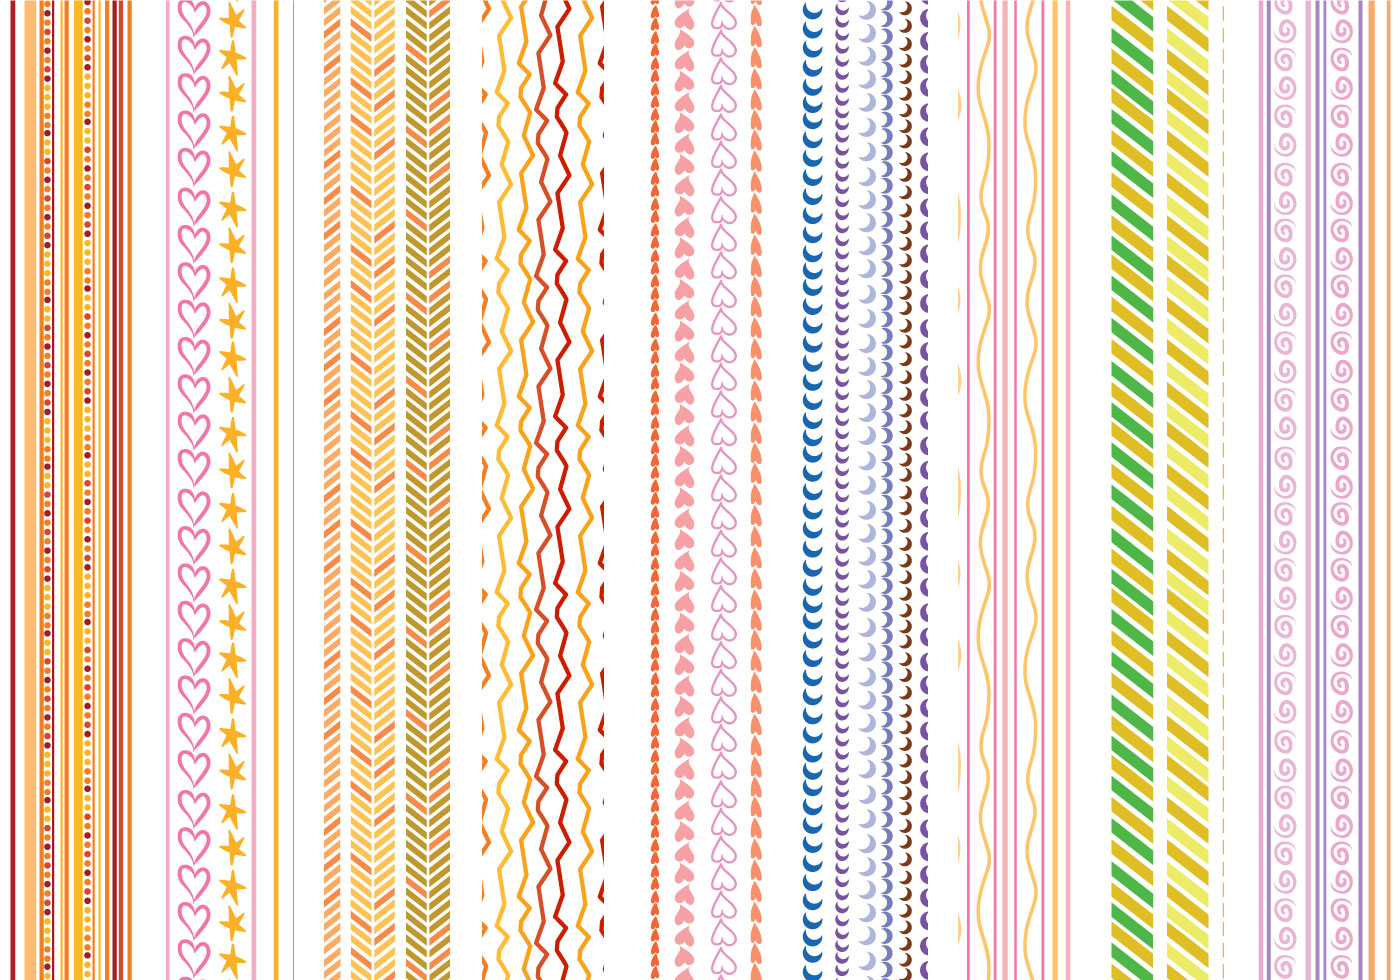 Stripes Pattern Free Vector Art (25554 Free Downloads)